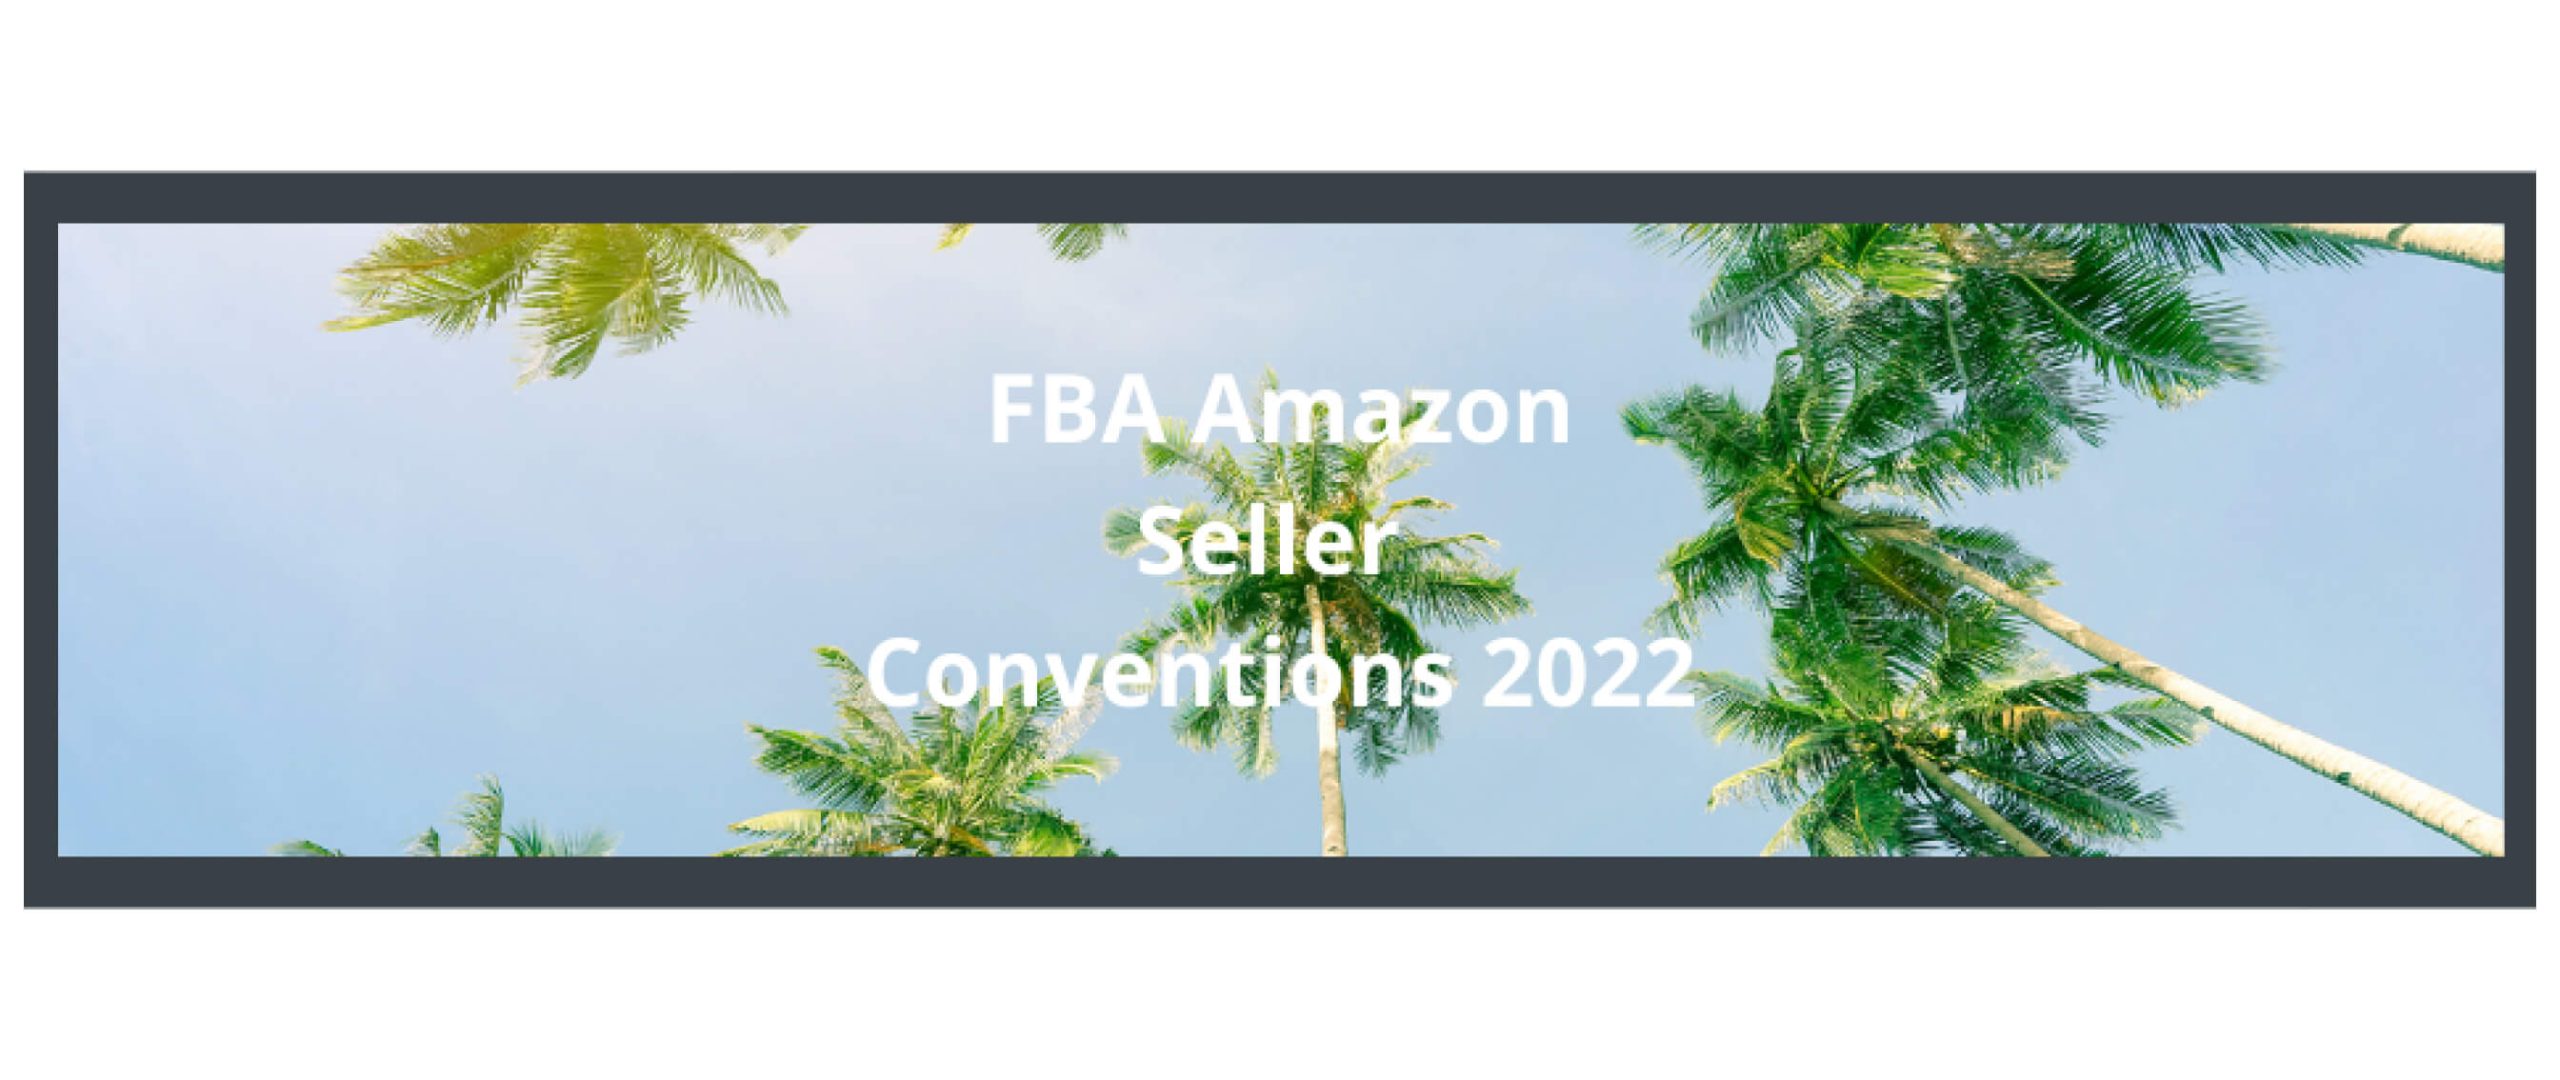 fba amazon seller conventions 2022